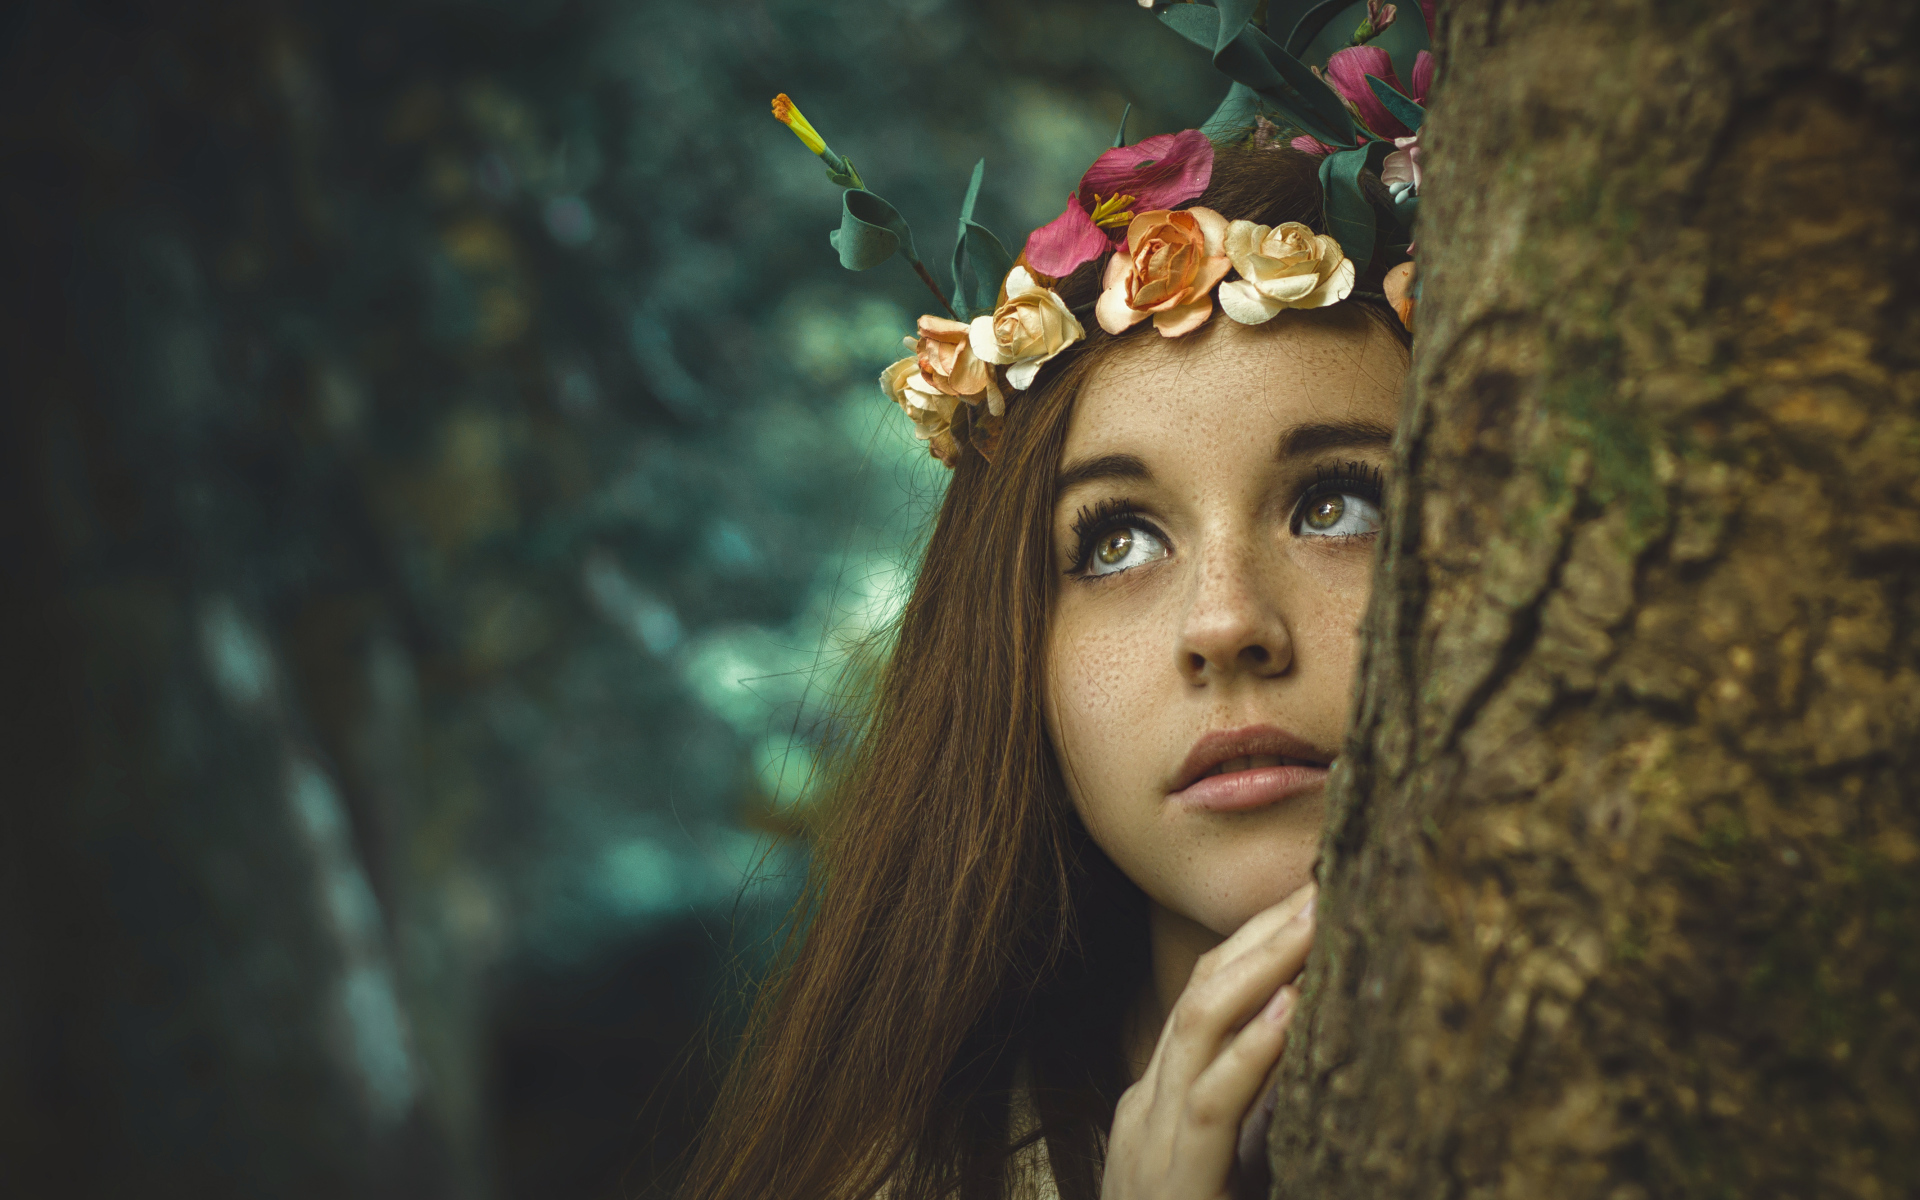 Девушка с венком на голове у дерева 